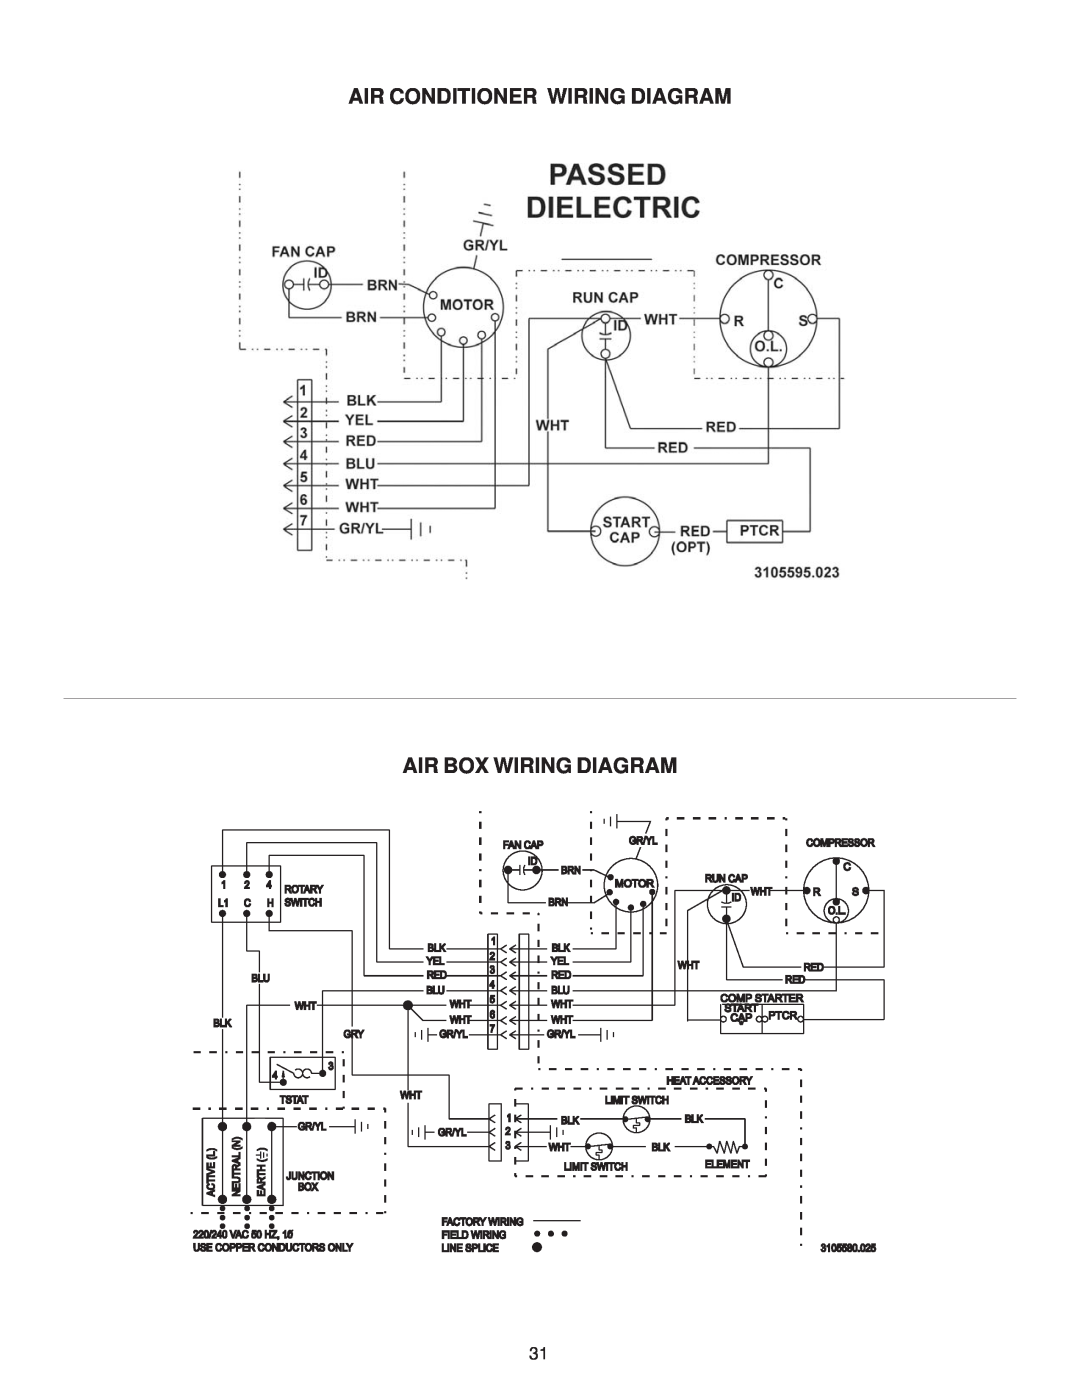 Dometic B3200 manual Air Conditioner Wiring Diagram, Air Box Wiring Diagram 